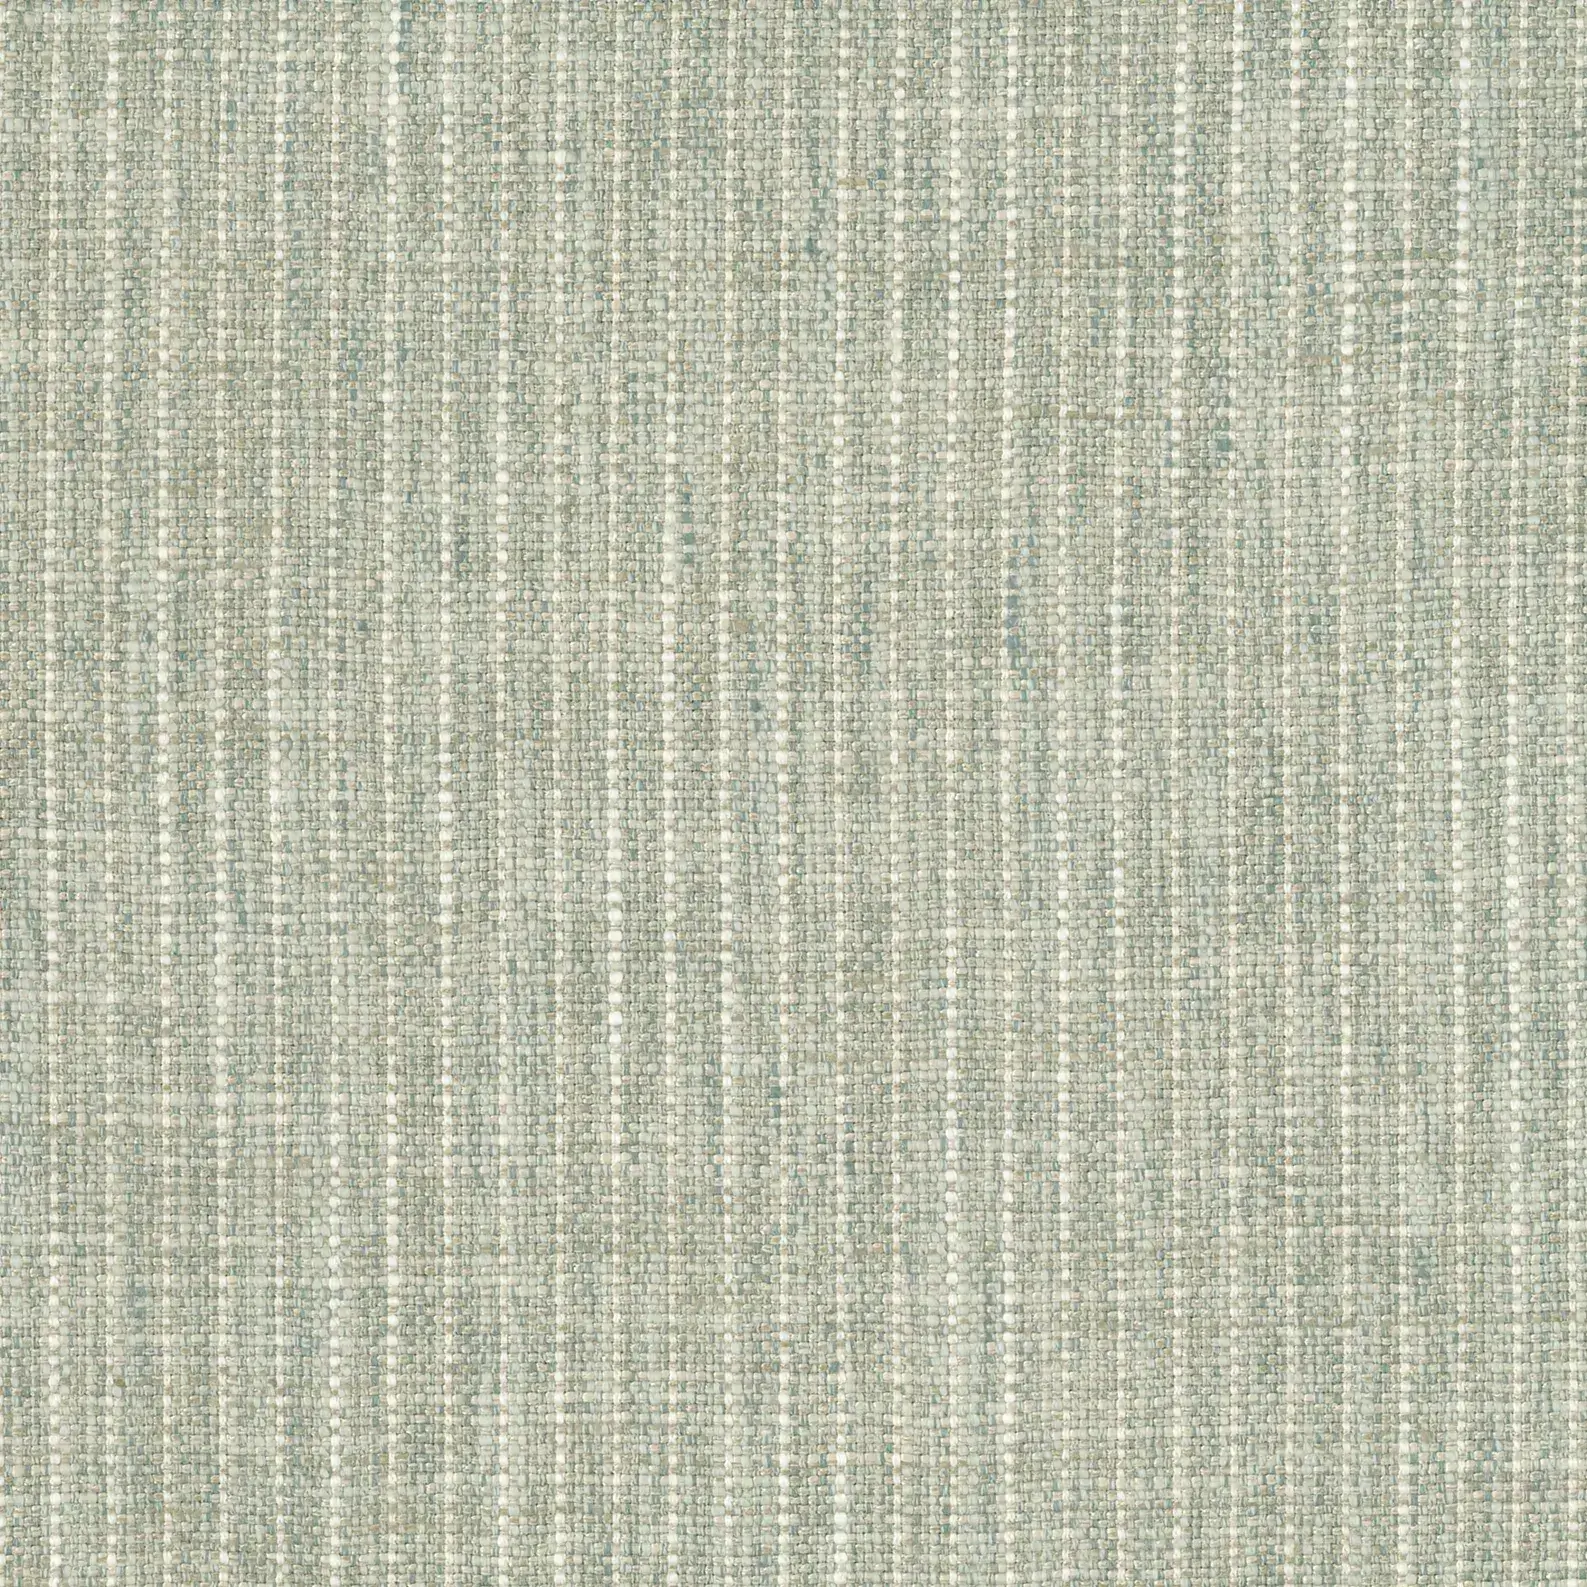 Rathlin Upholstery Fabric. By Warwick Fabrics. Linen Slub Fabric.